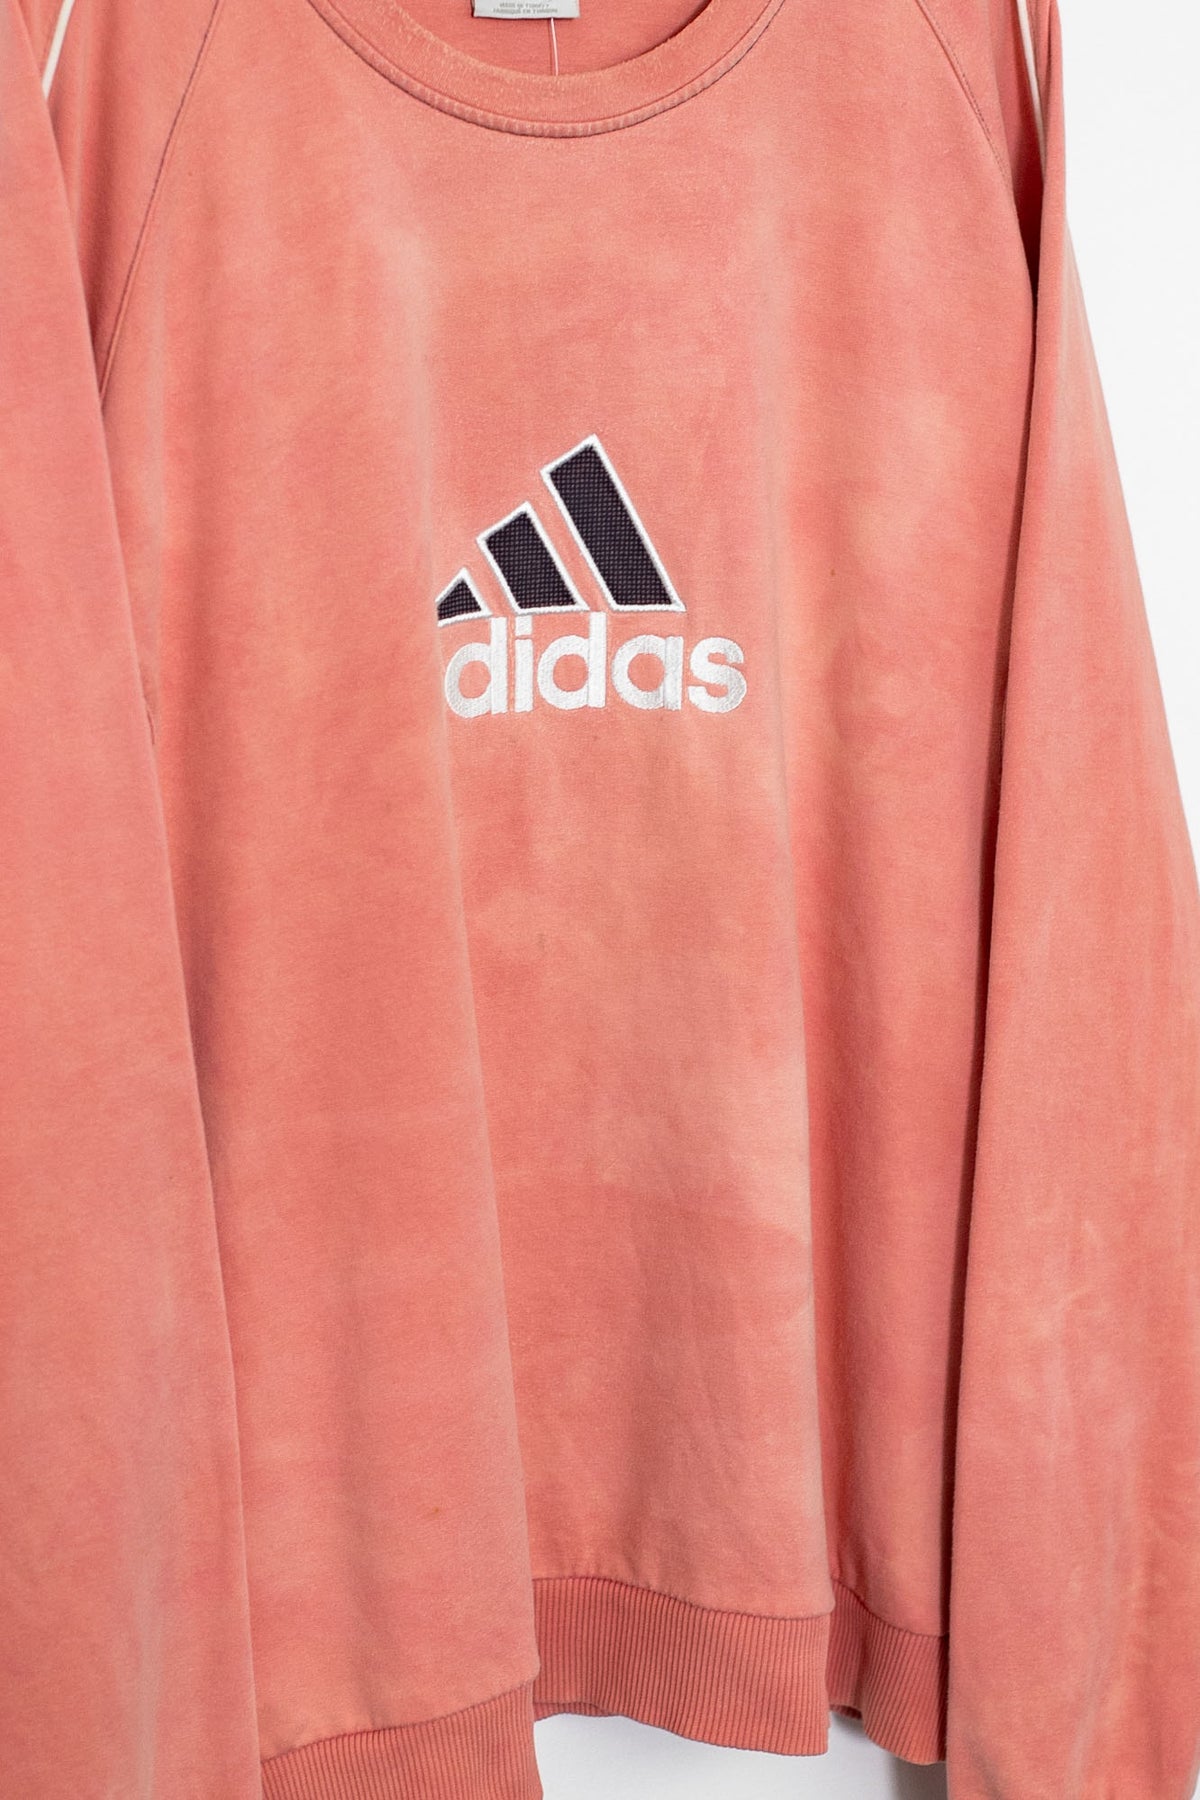 00s Adidas Dye Sweatshirt (L)